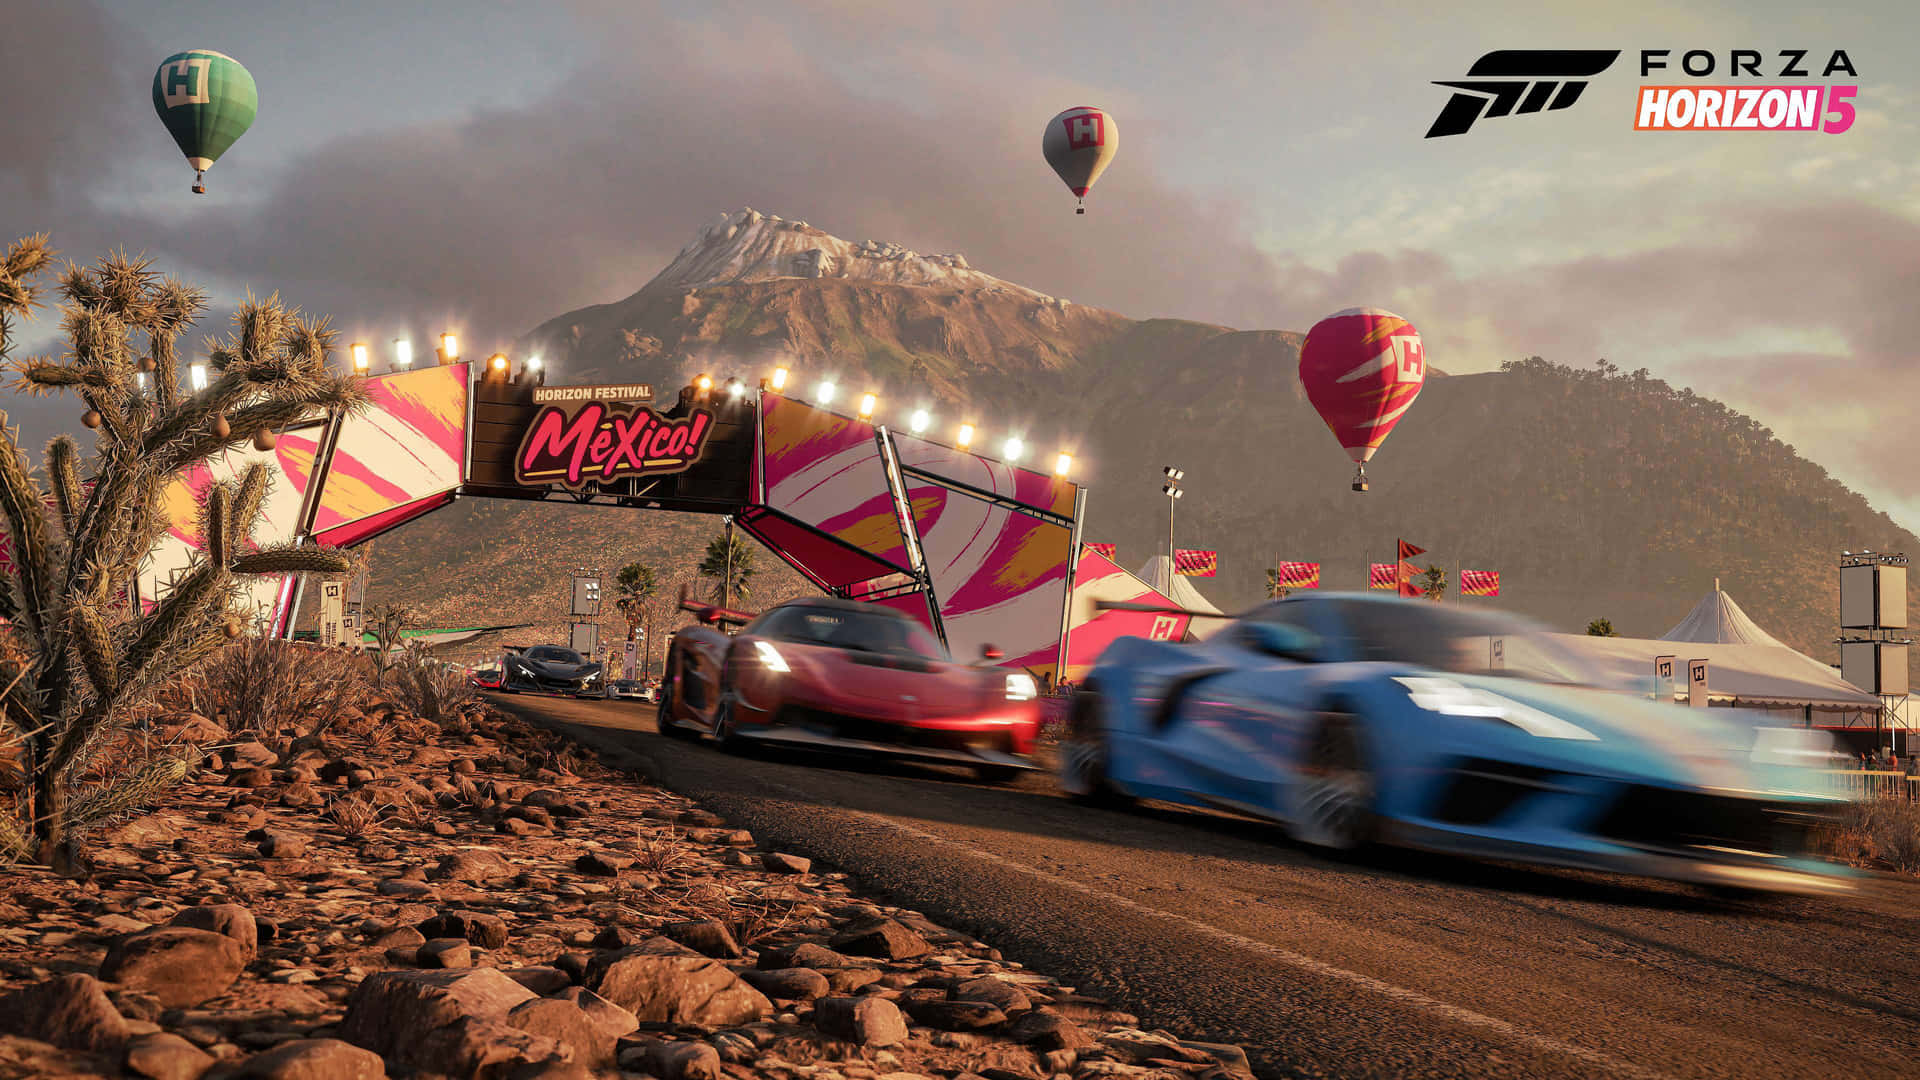 100+] Forza Horizon 5 4k Wallpapers | Wallpapers.com